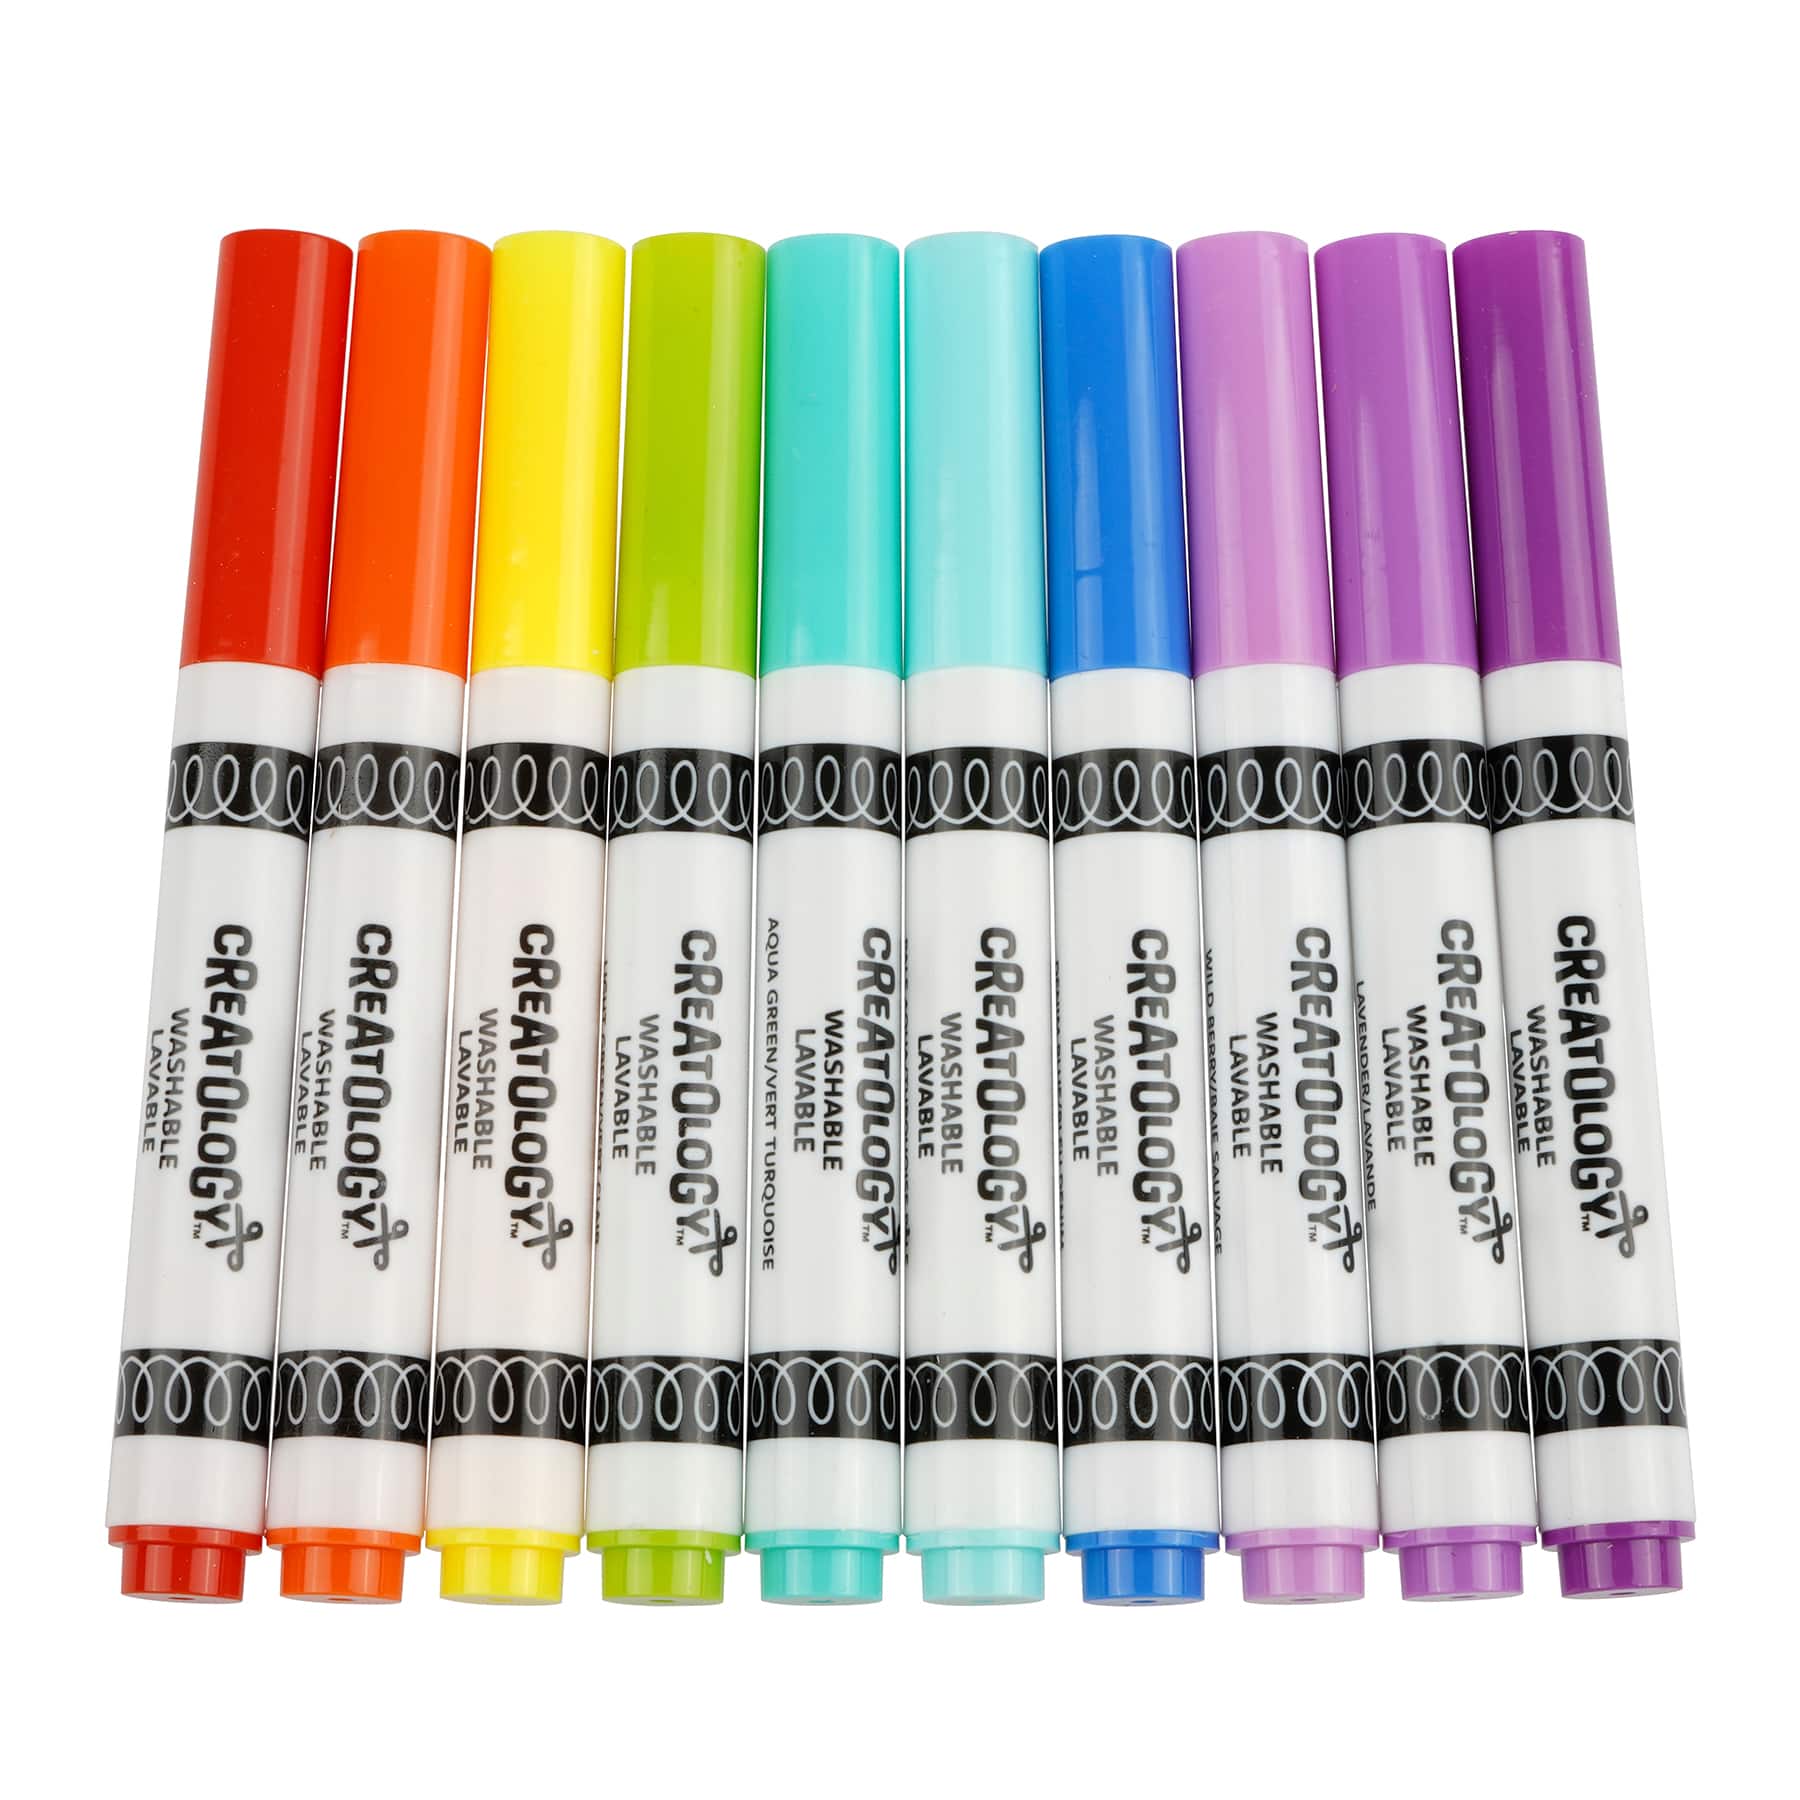 12 Packs: 10ct. (120 total) Crayola® Ultra-Clean Broad Line